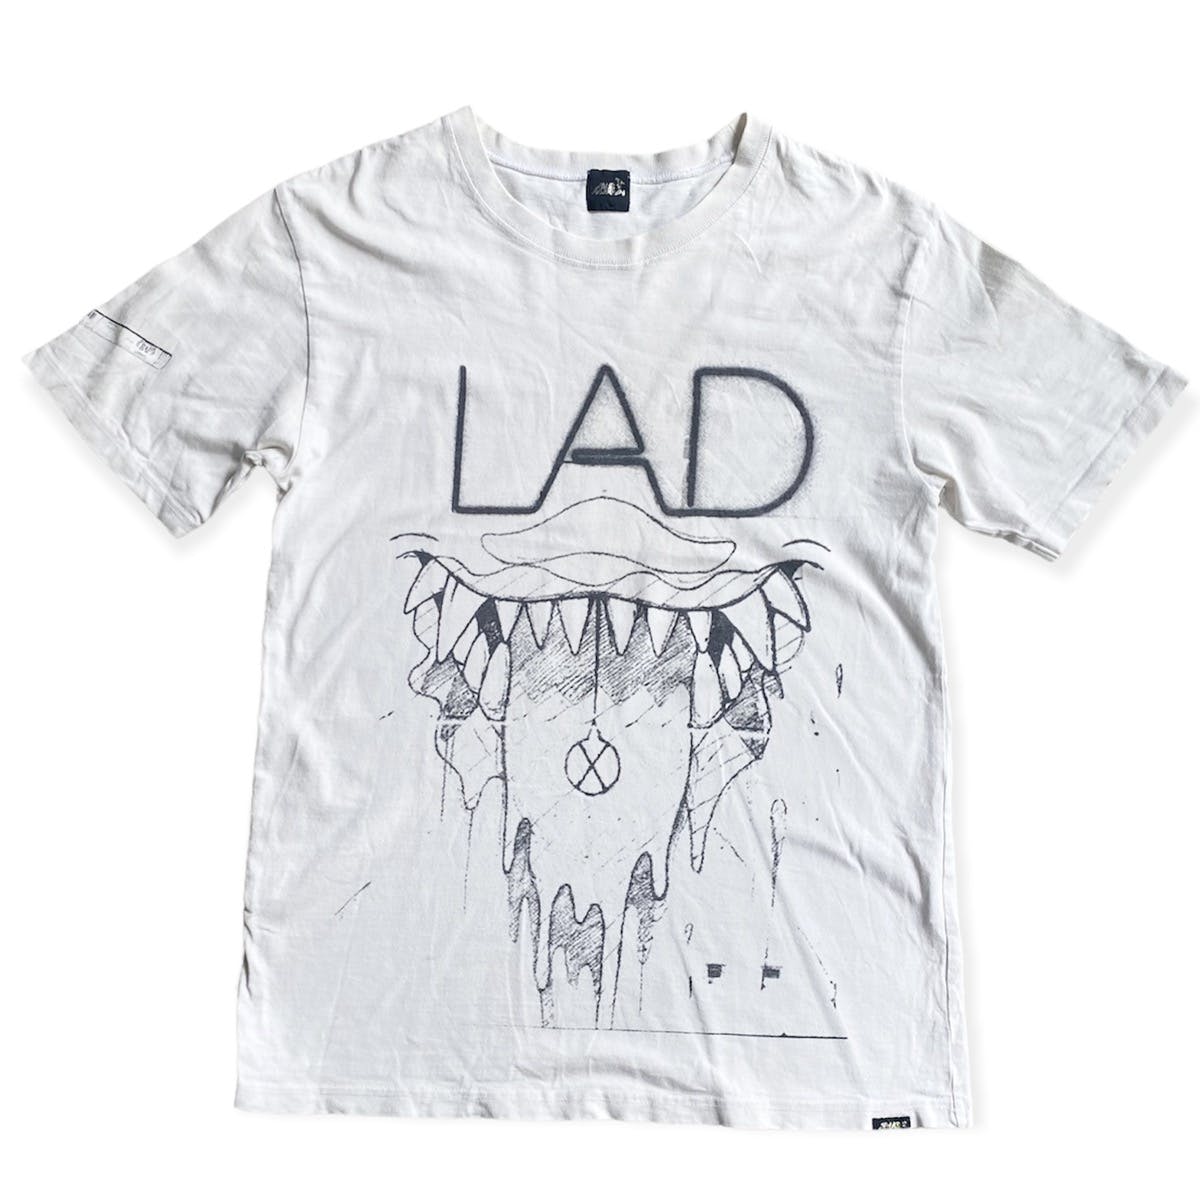 Lad Musician Fang T Shirt - 1